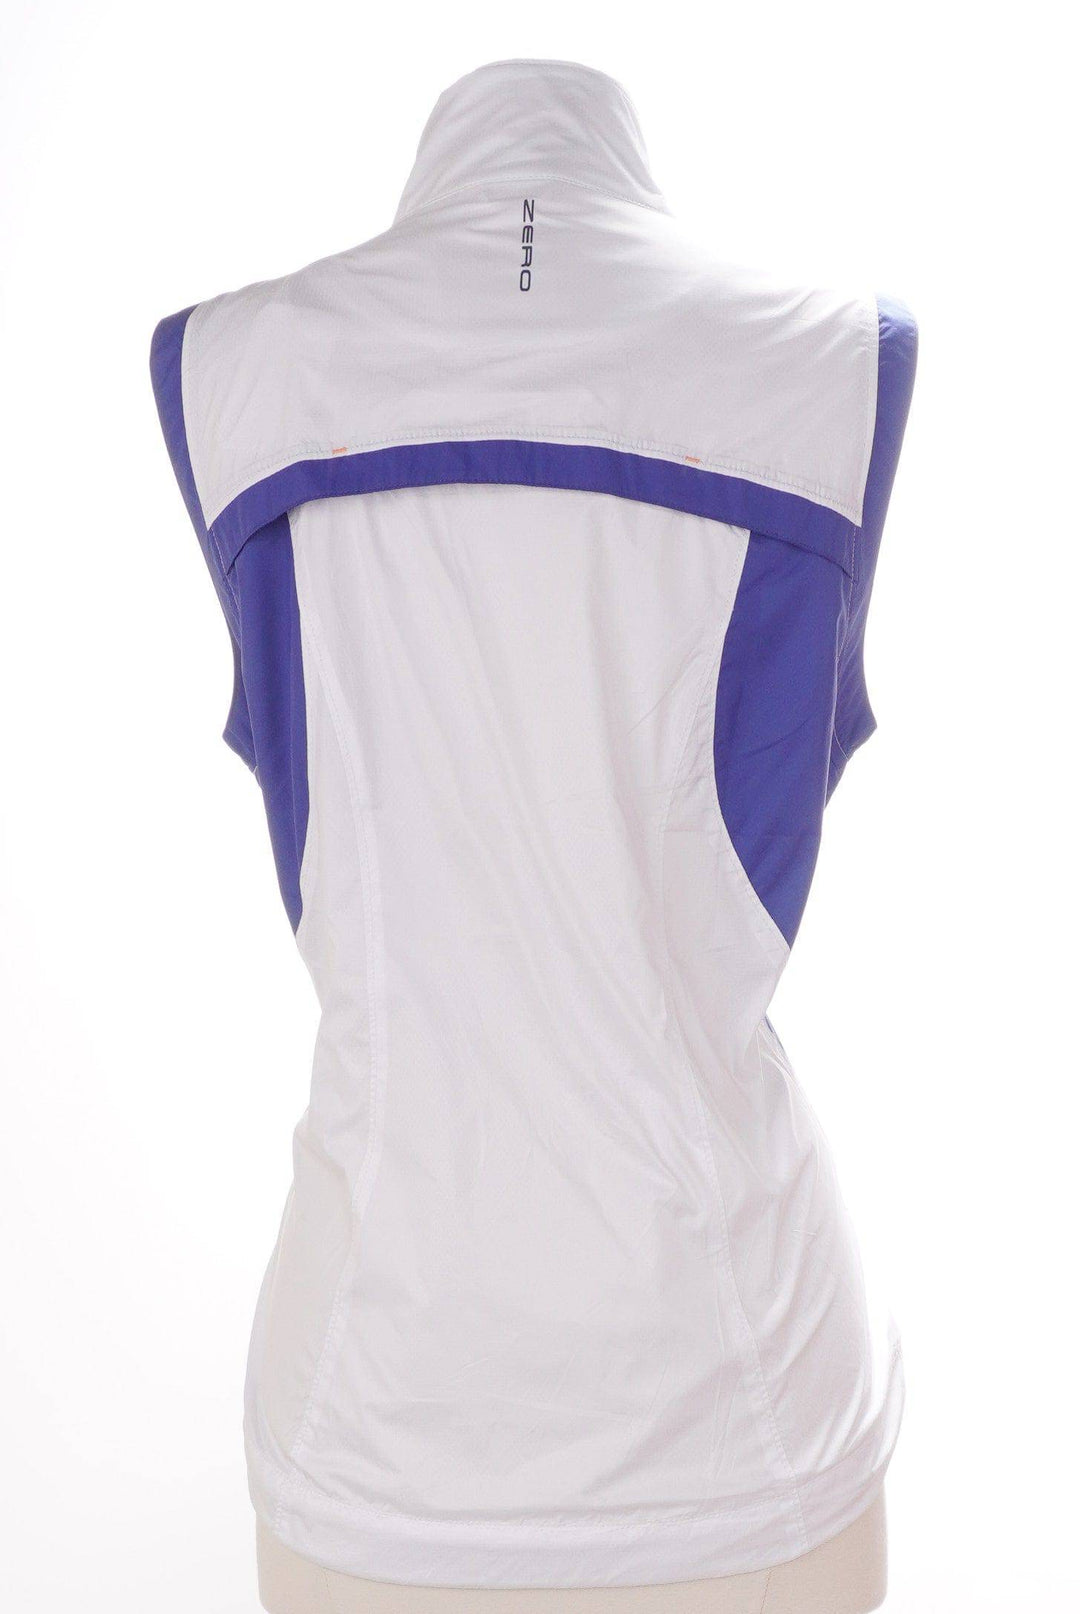 Zero Restriction White/Blue / Medium / Consigned Zero Restriction Sleeveless Vest - White/Blue - Size Medium